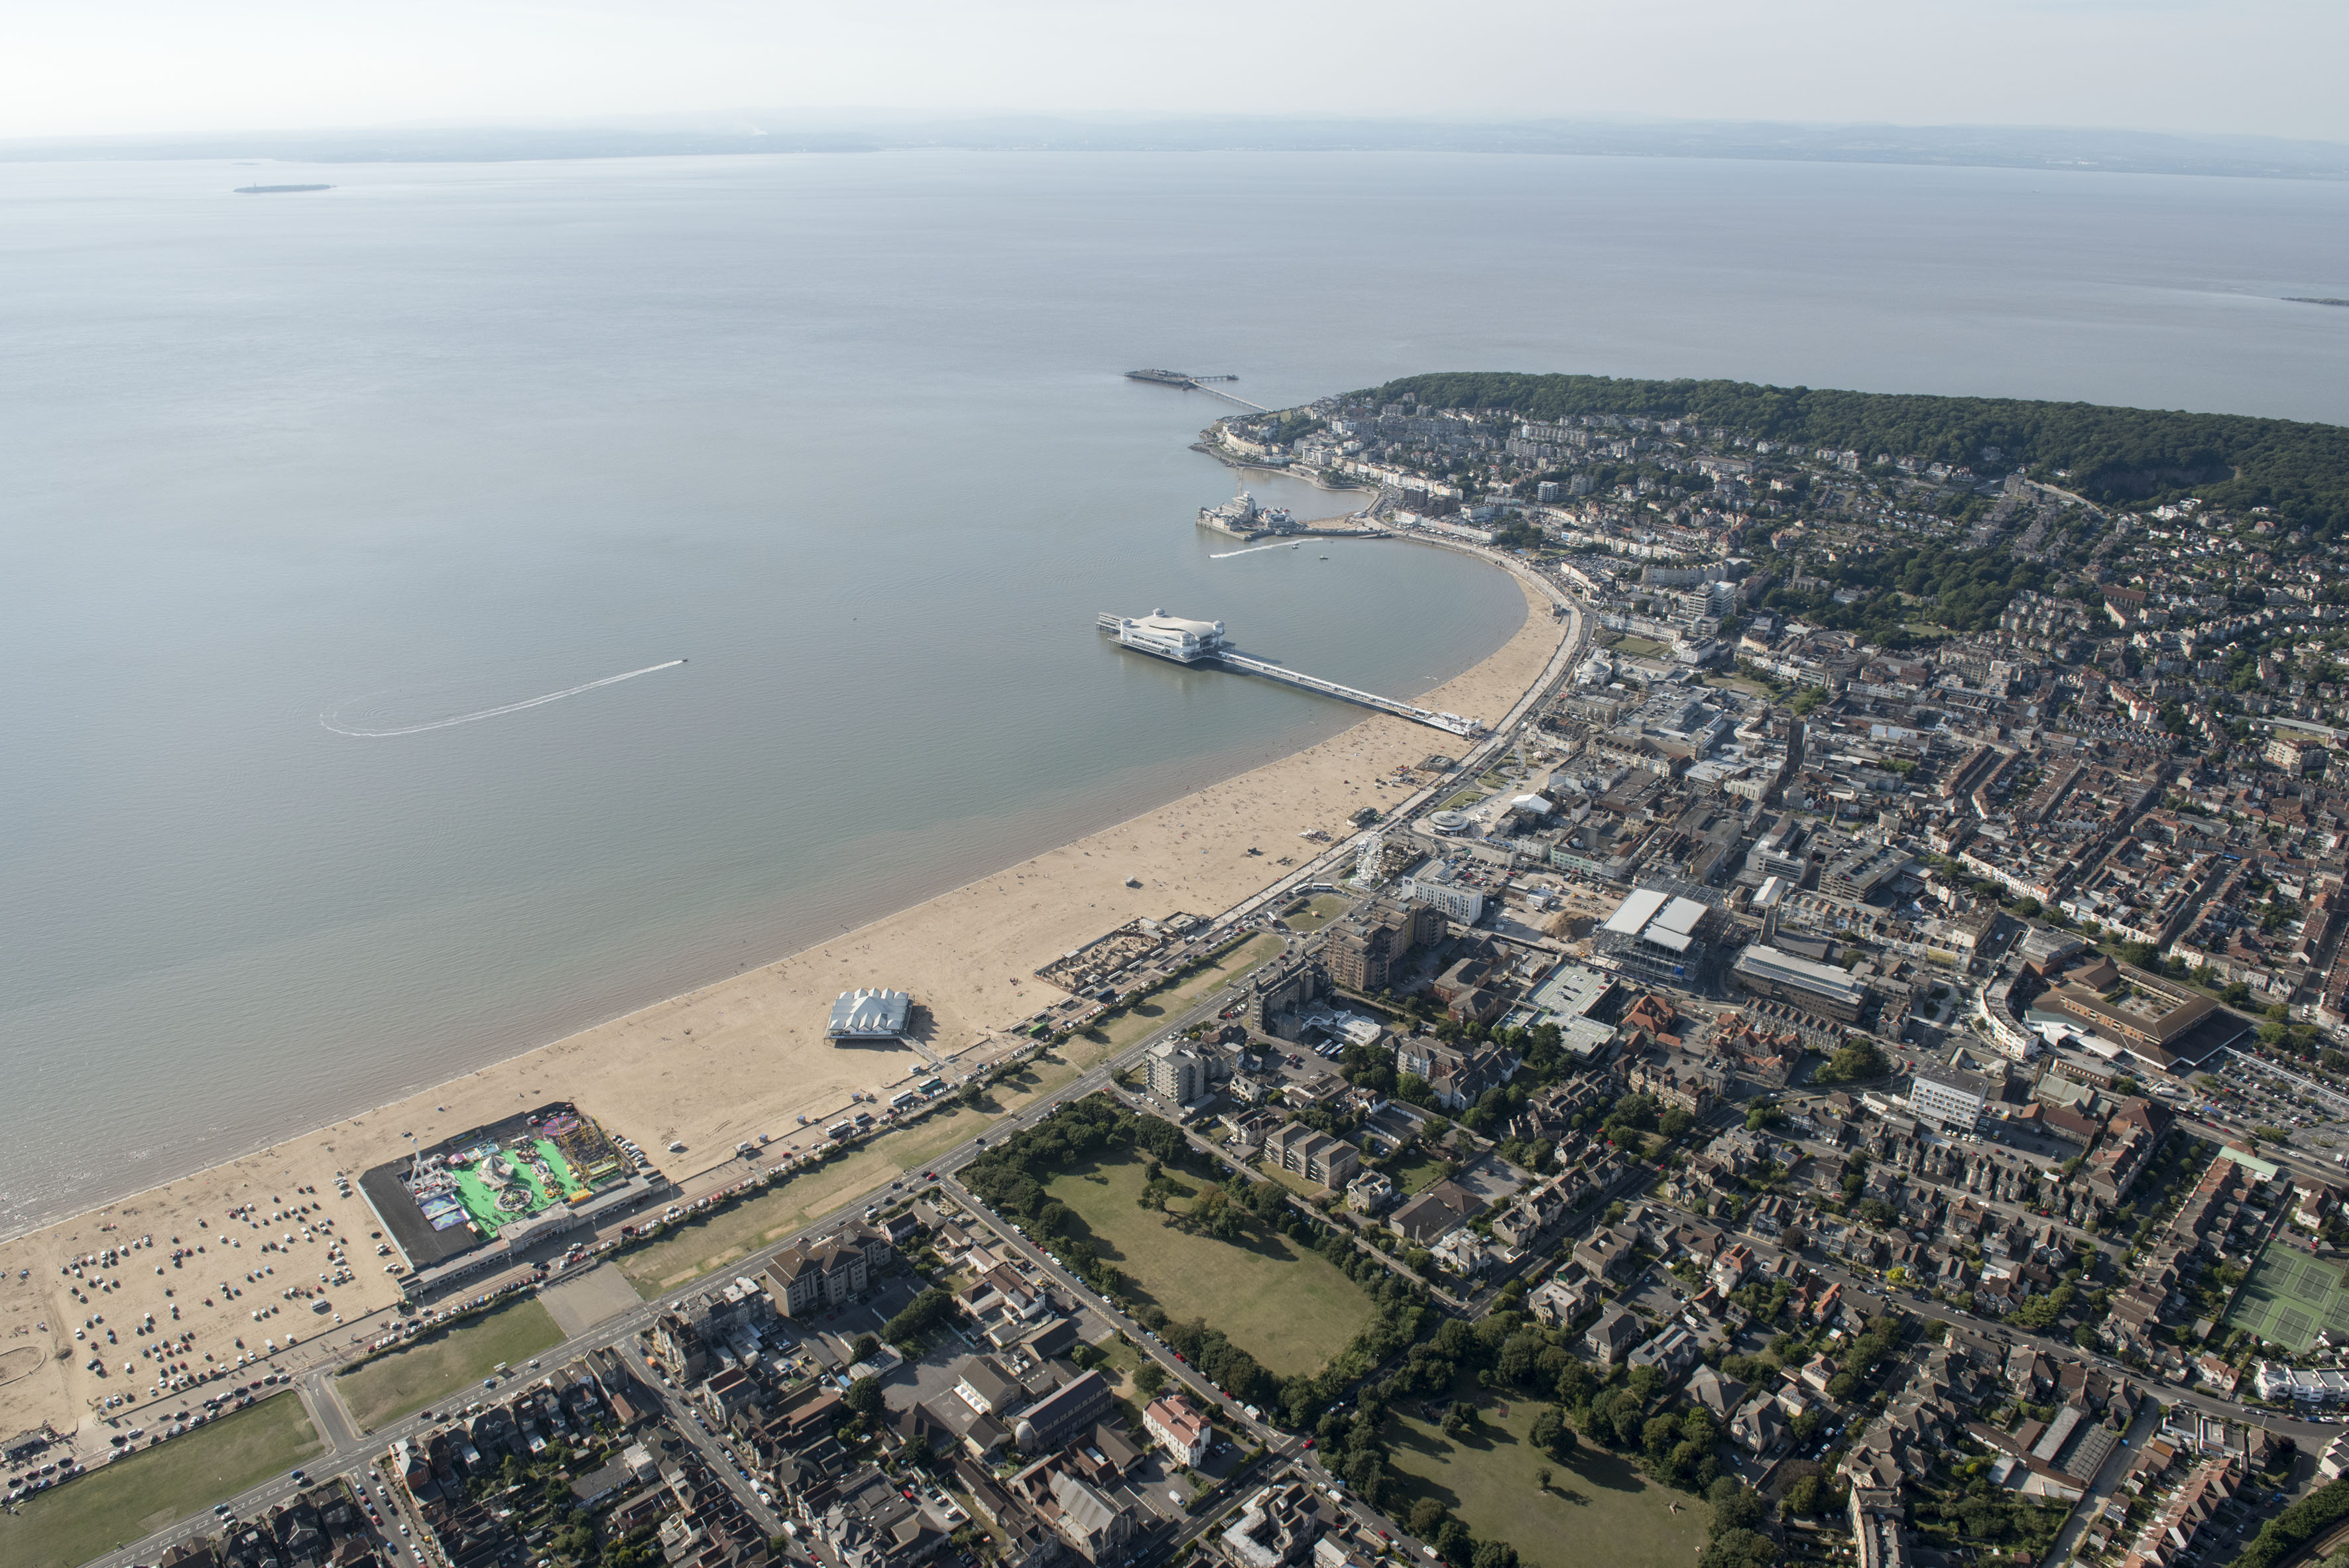 Aerial photograph of Weston-super-Mare